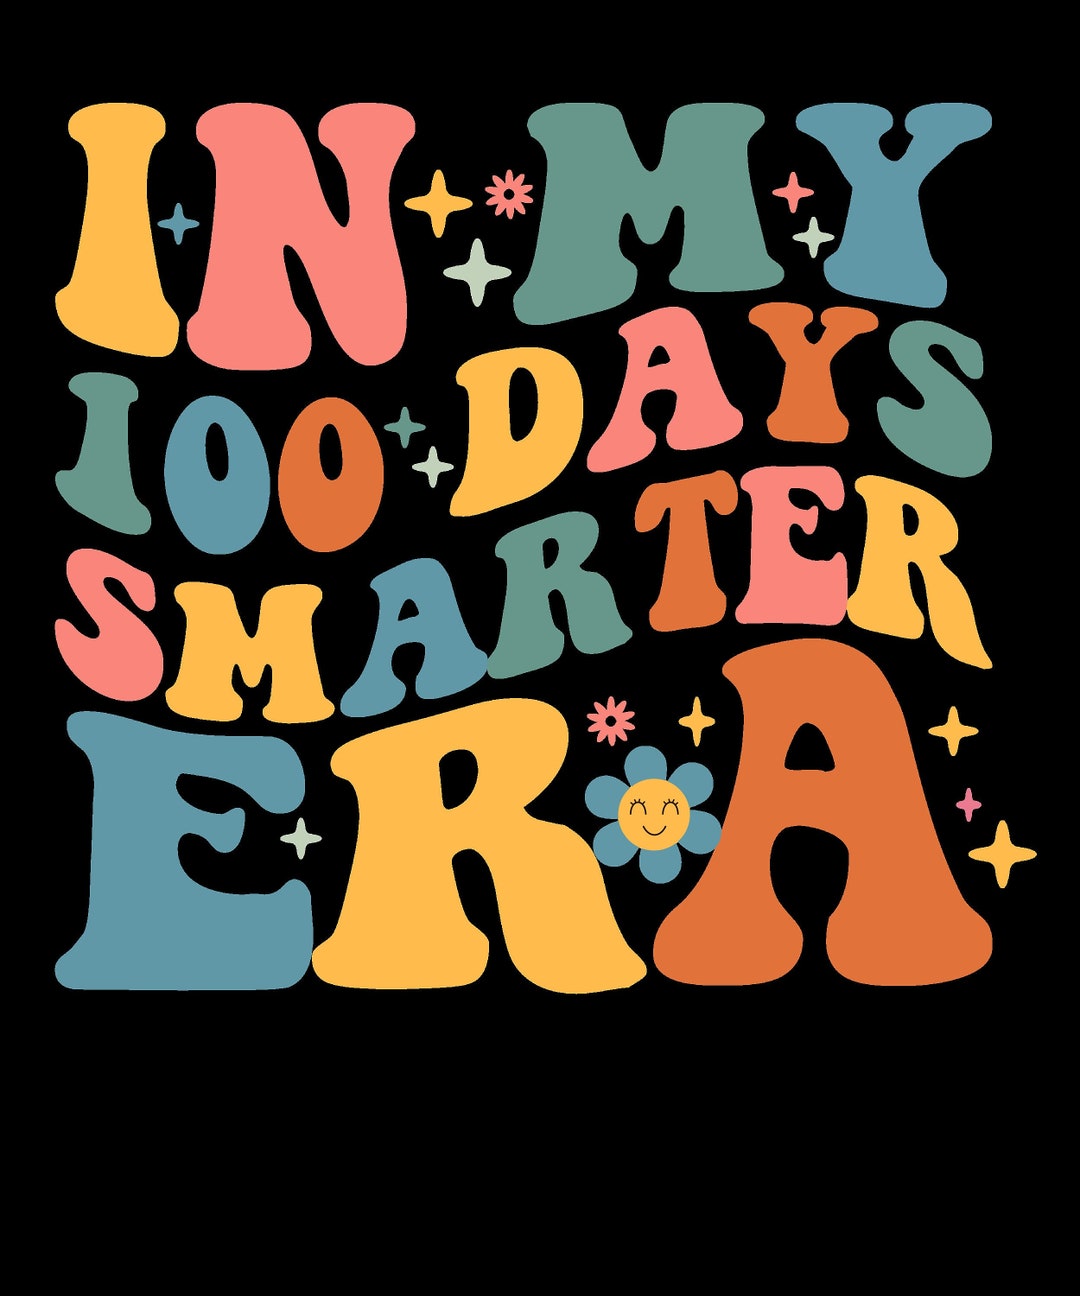 In My 100 Days Smarter Era Svg Png, Retro Groovy 100th Day Teacher ...